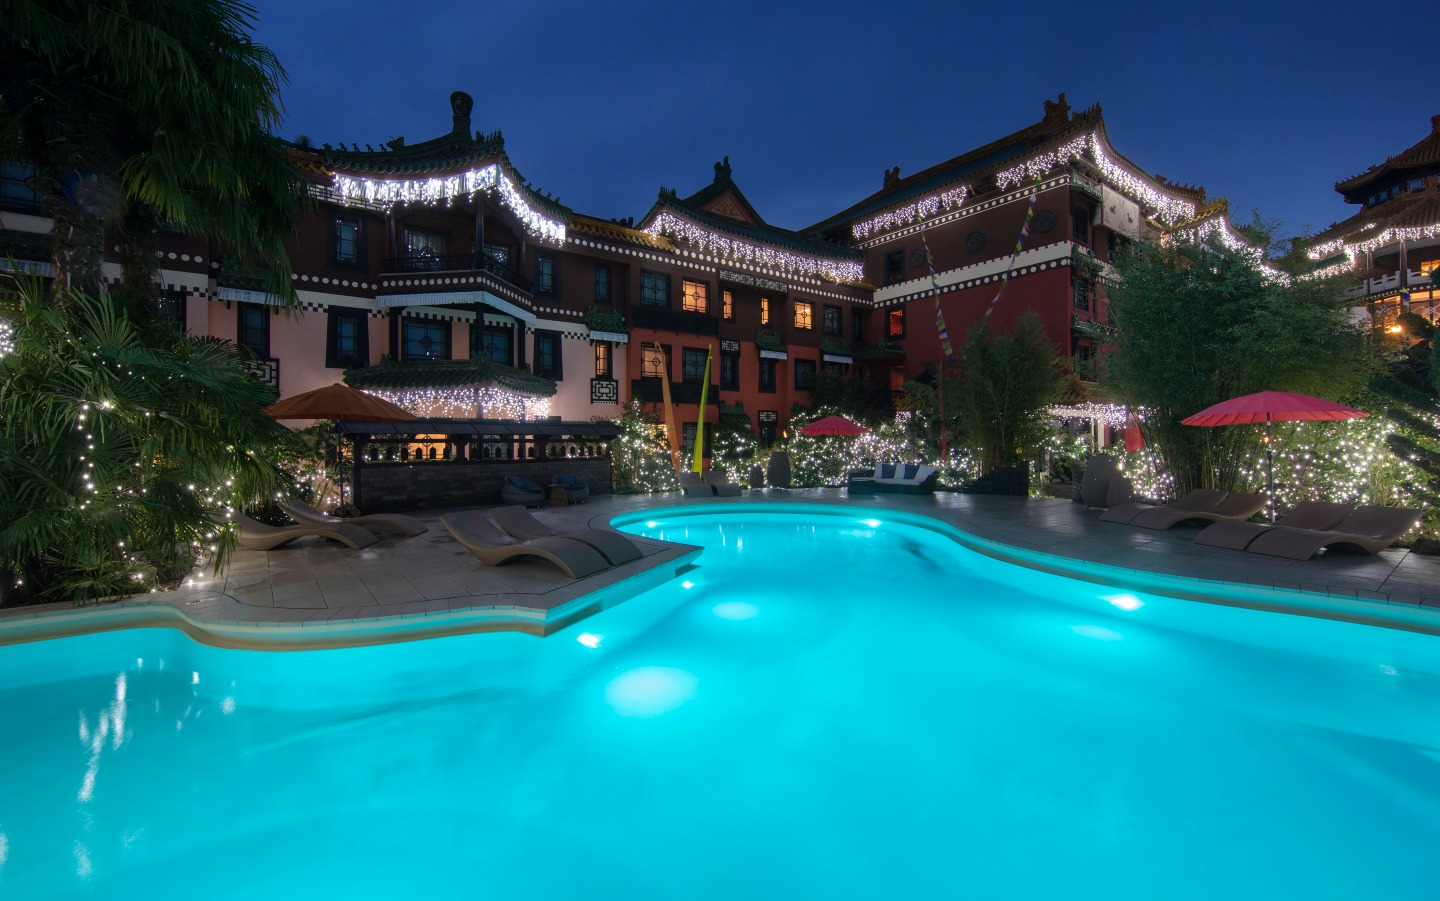 Hotel Ling Bao - Phantasialand Erlebnishotel (Brühl): Alle Infos zum Hotel